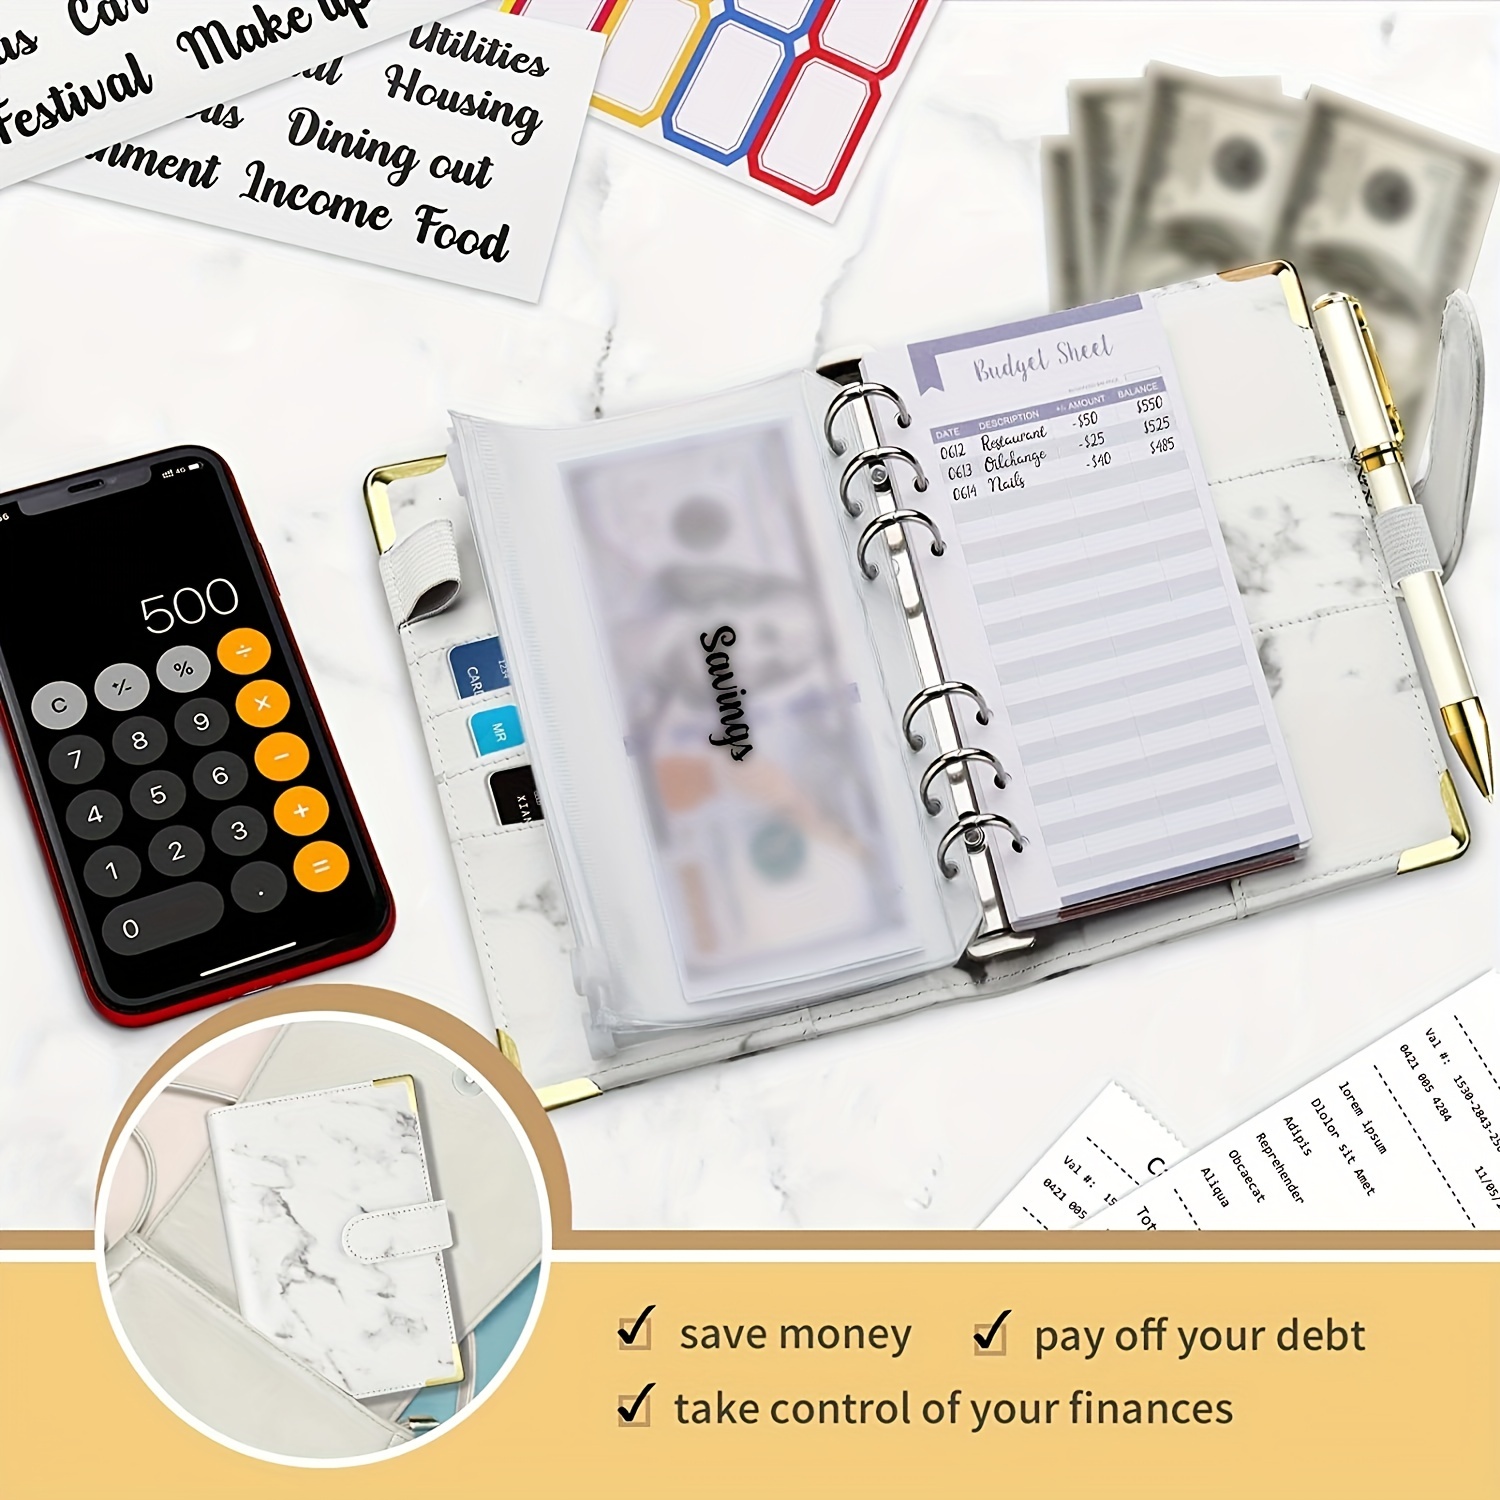 Budget Planner Book Cash Envelopes  Money Saving Binder Envelopes - A6  Binder - Aliexpress